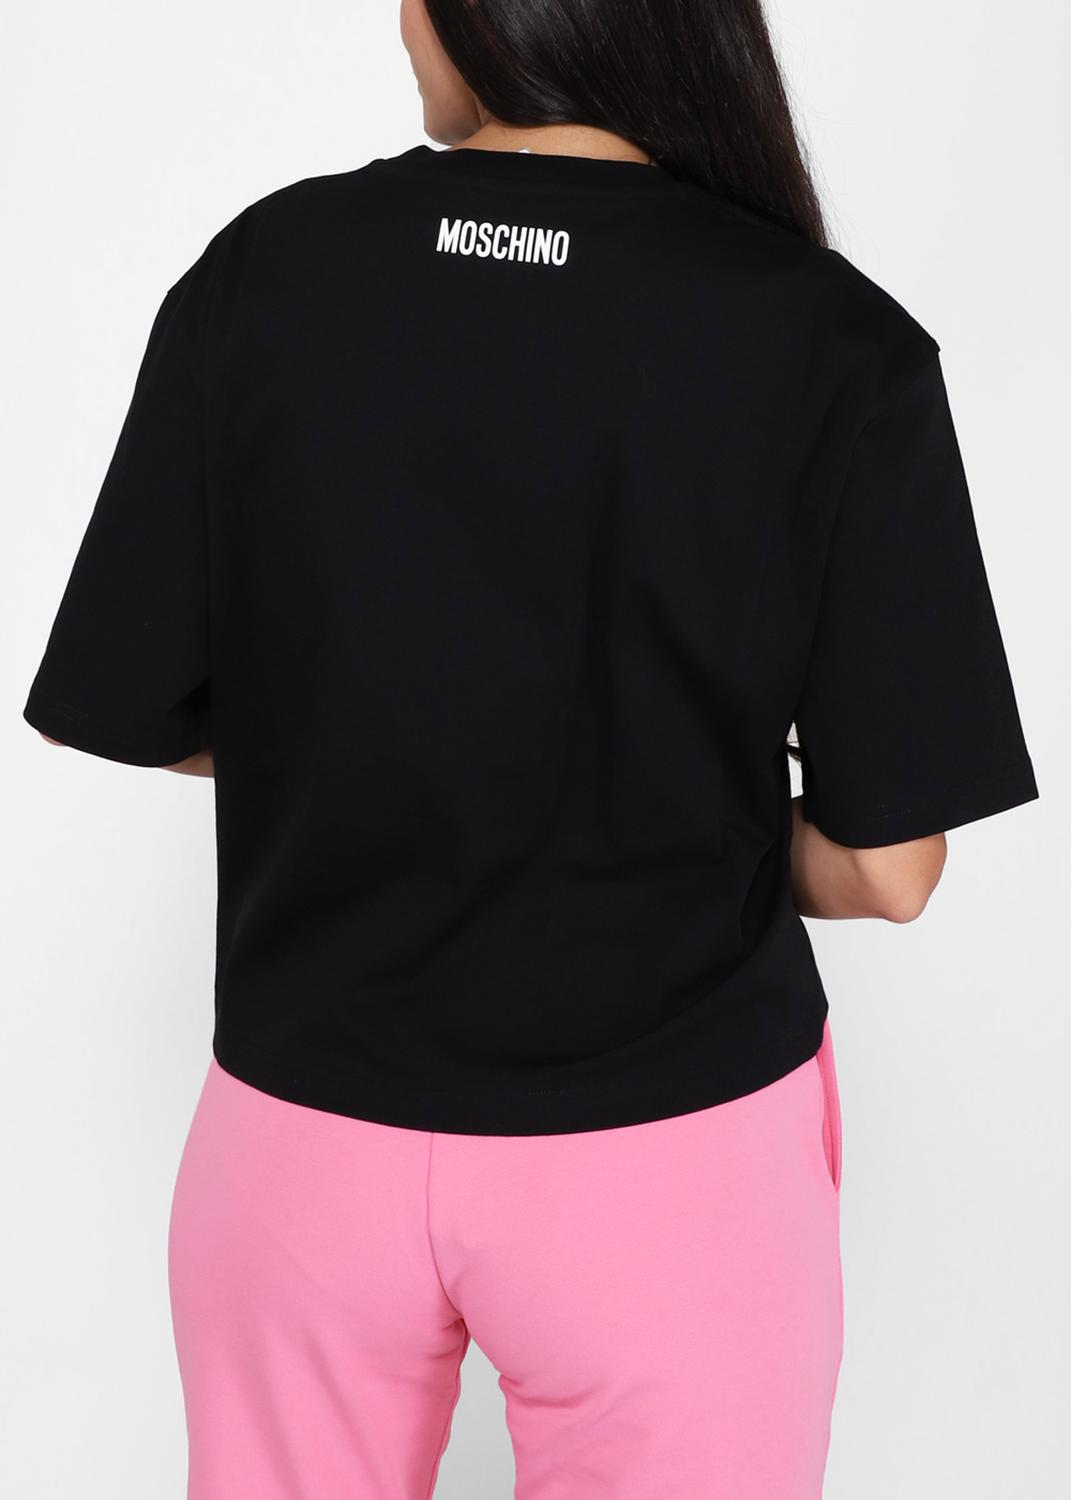 Moschino T-Shirt  MSC-V0710